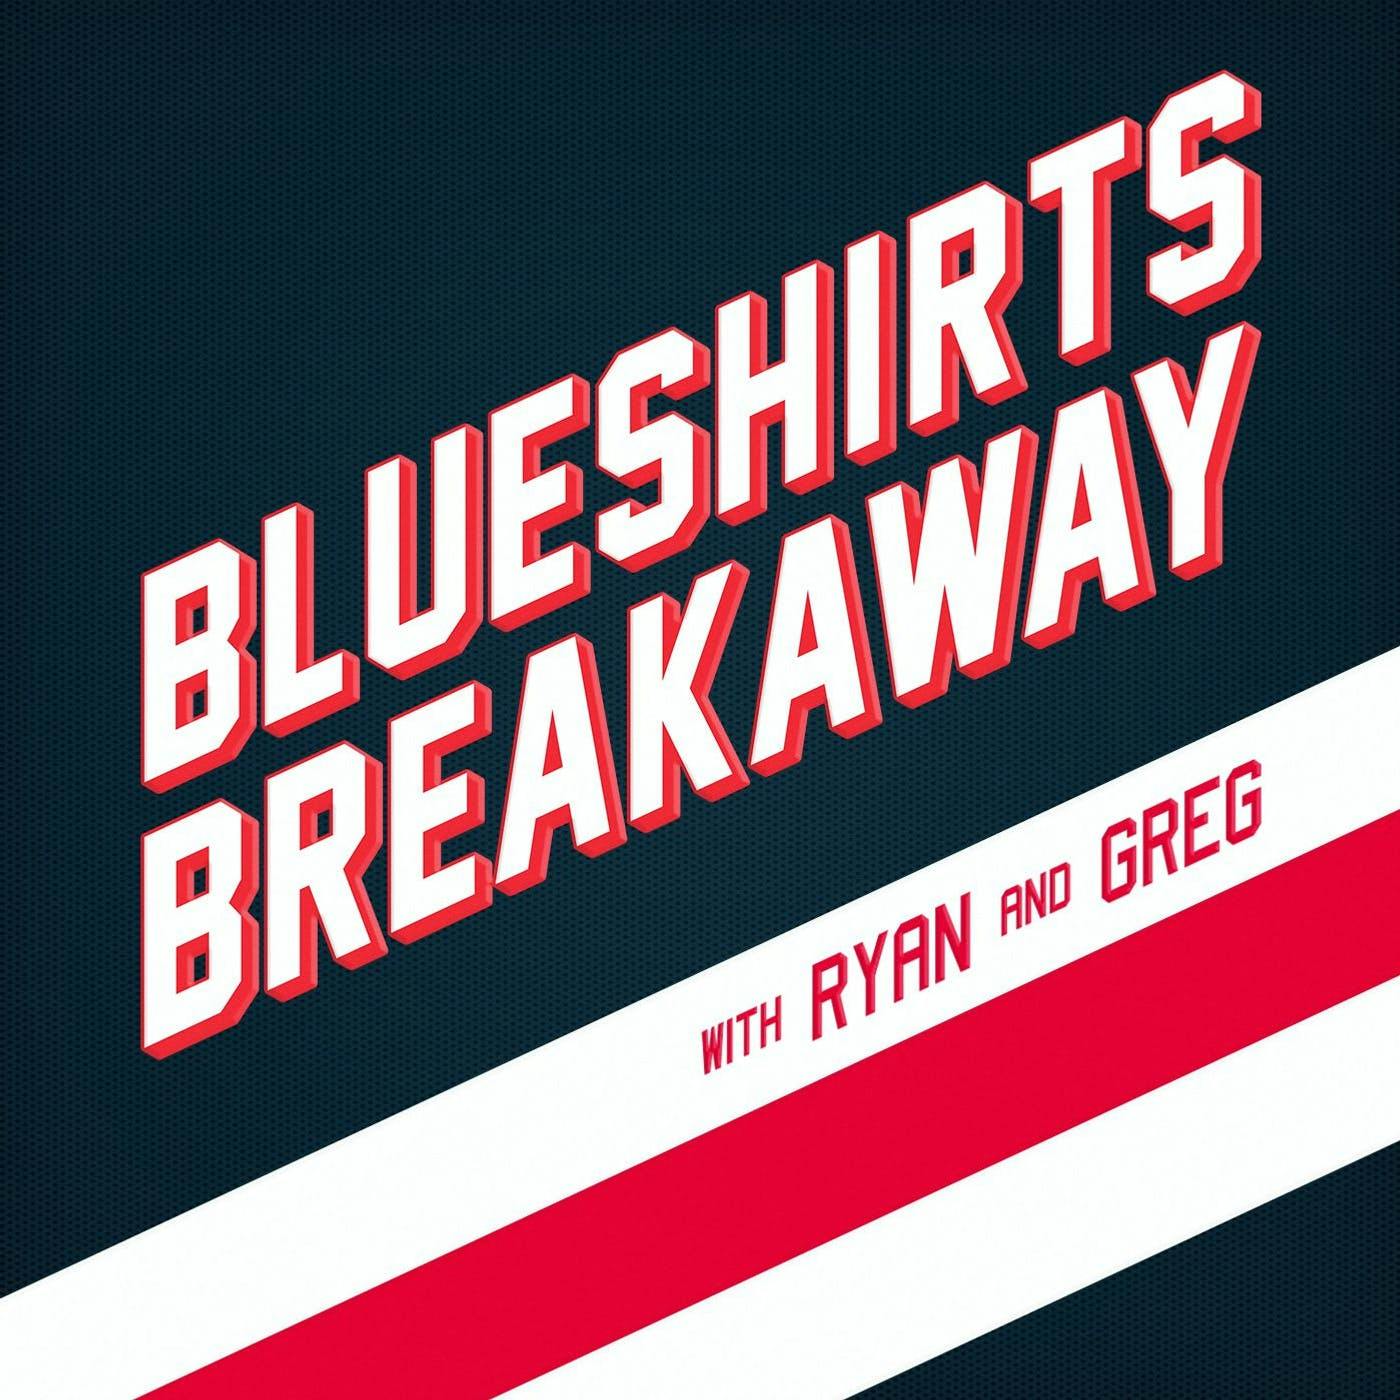 Blueshirts Breakaway EP 146 - Metro Preview 2018/19 Caps and Devils